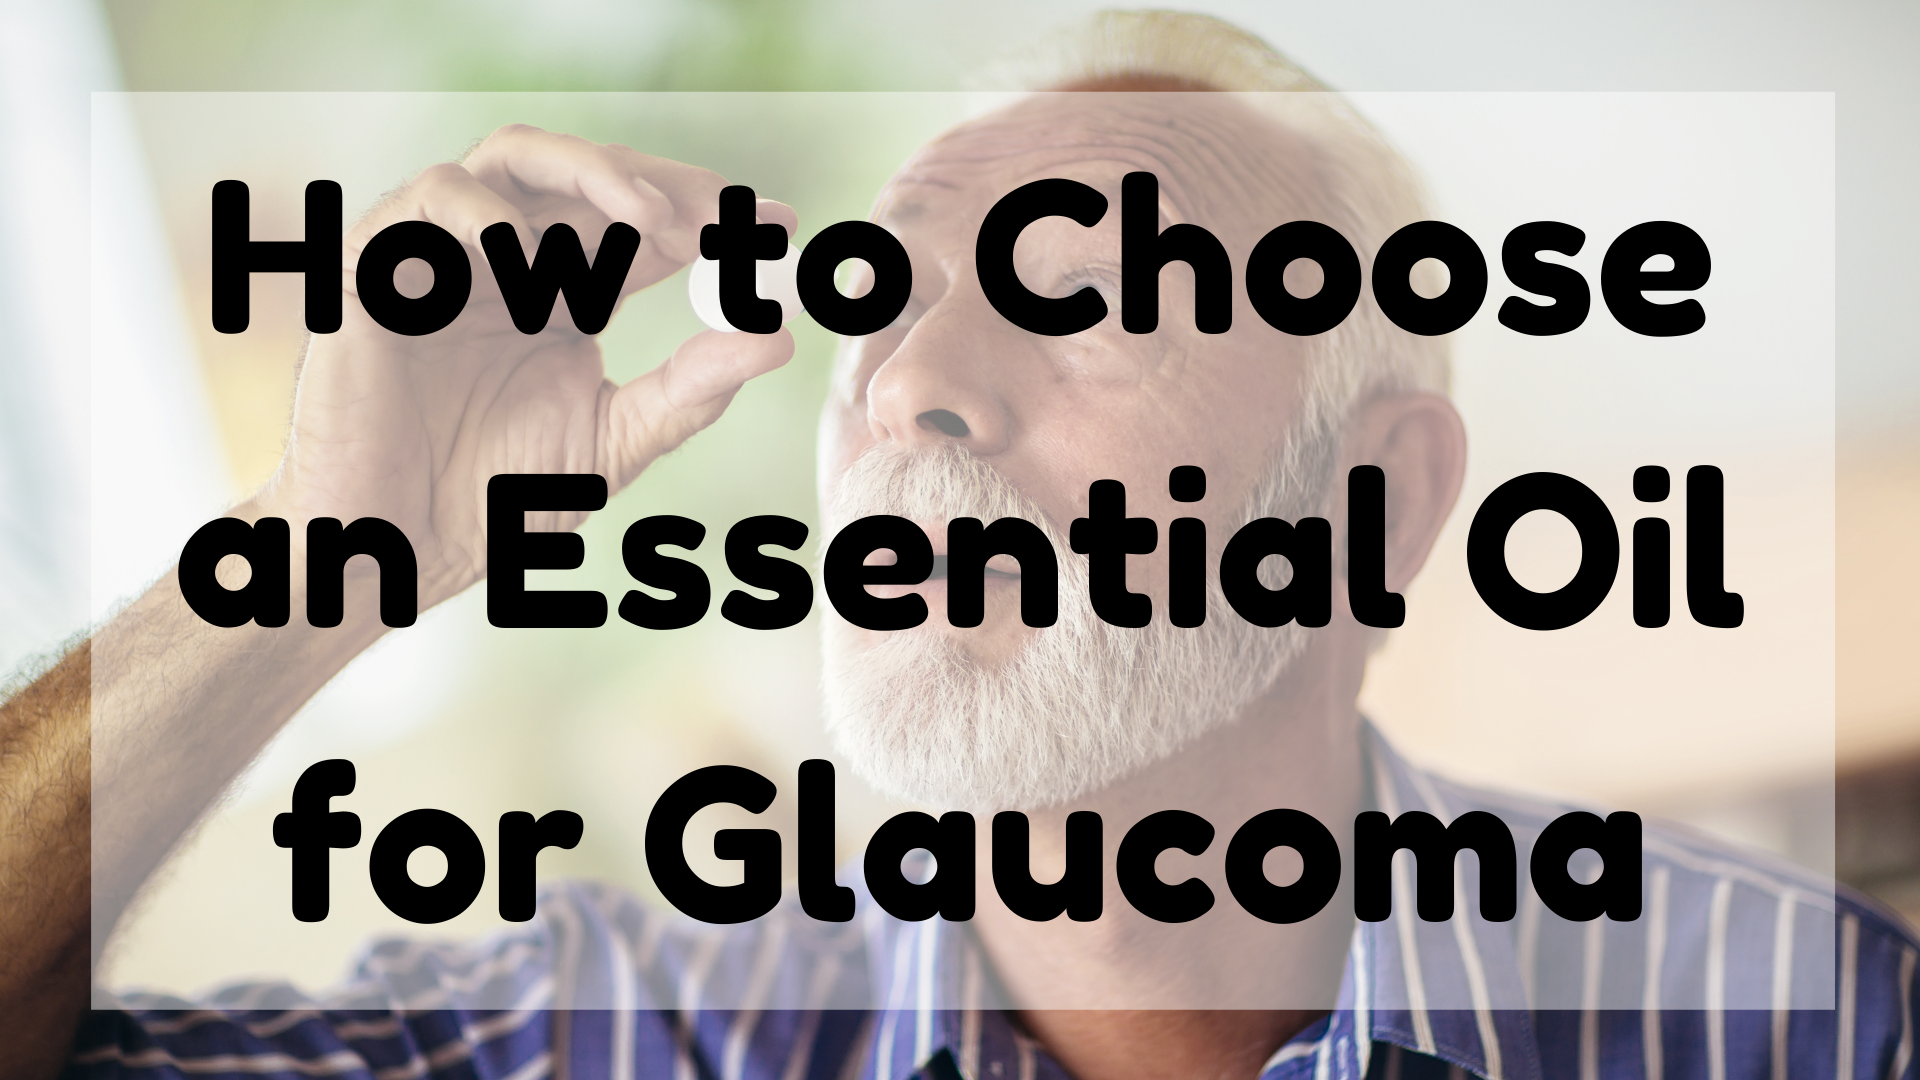 Essential Oil for Glaucoma